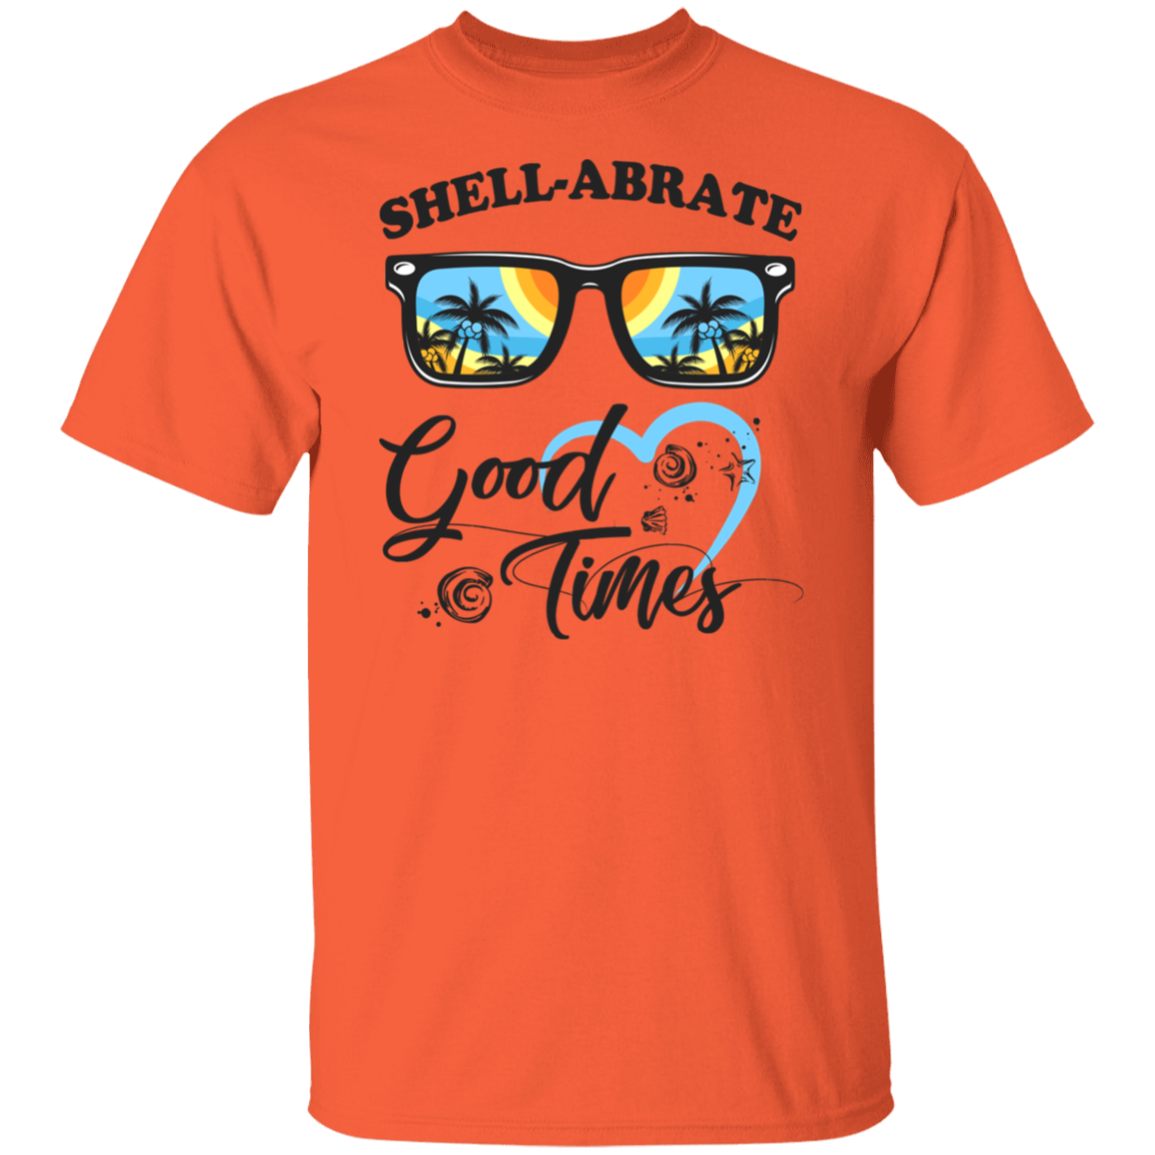 Shell-Abrate Good Times T-Shirt